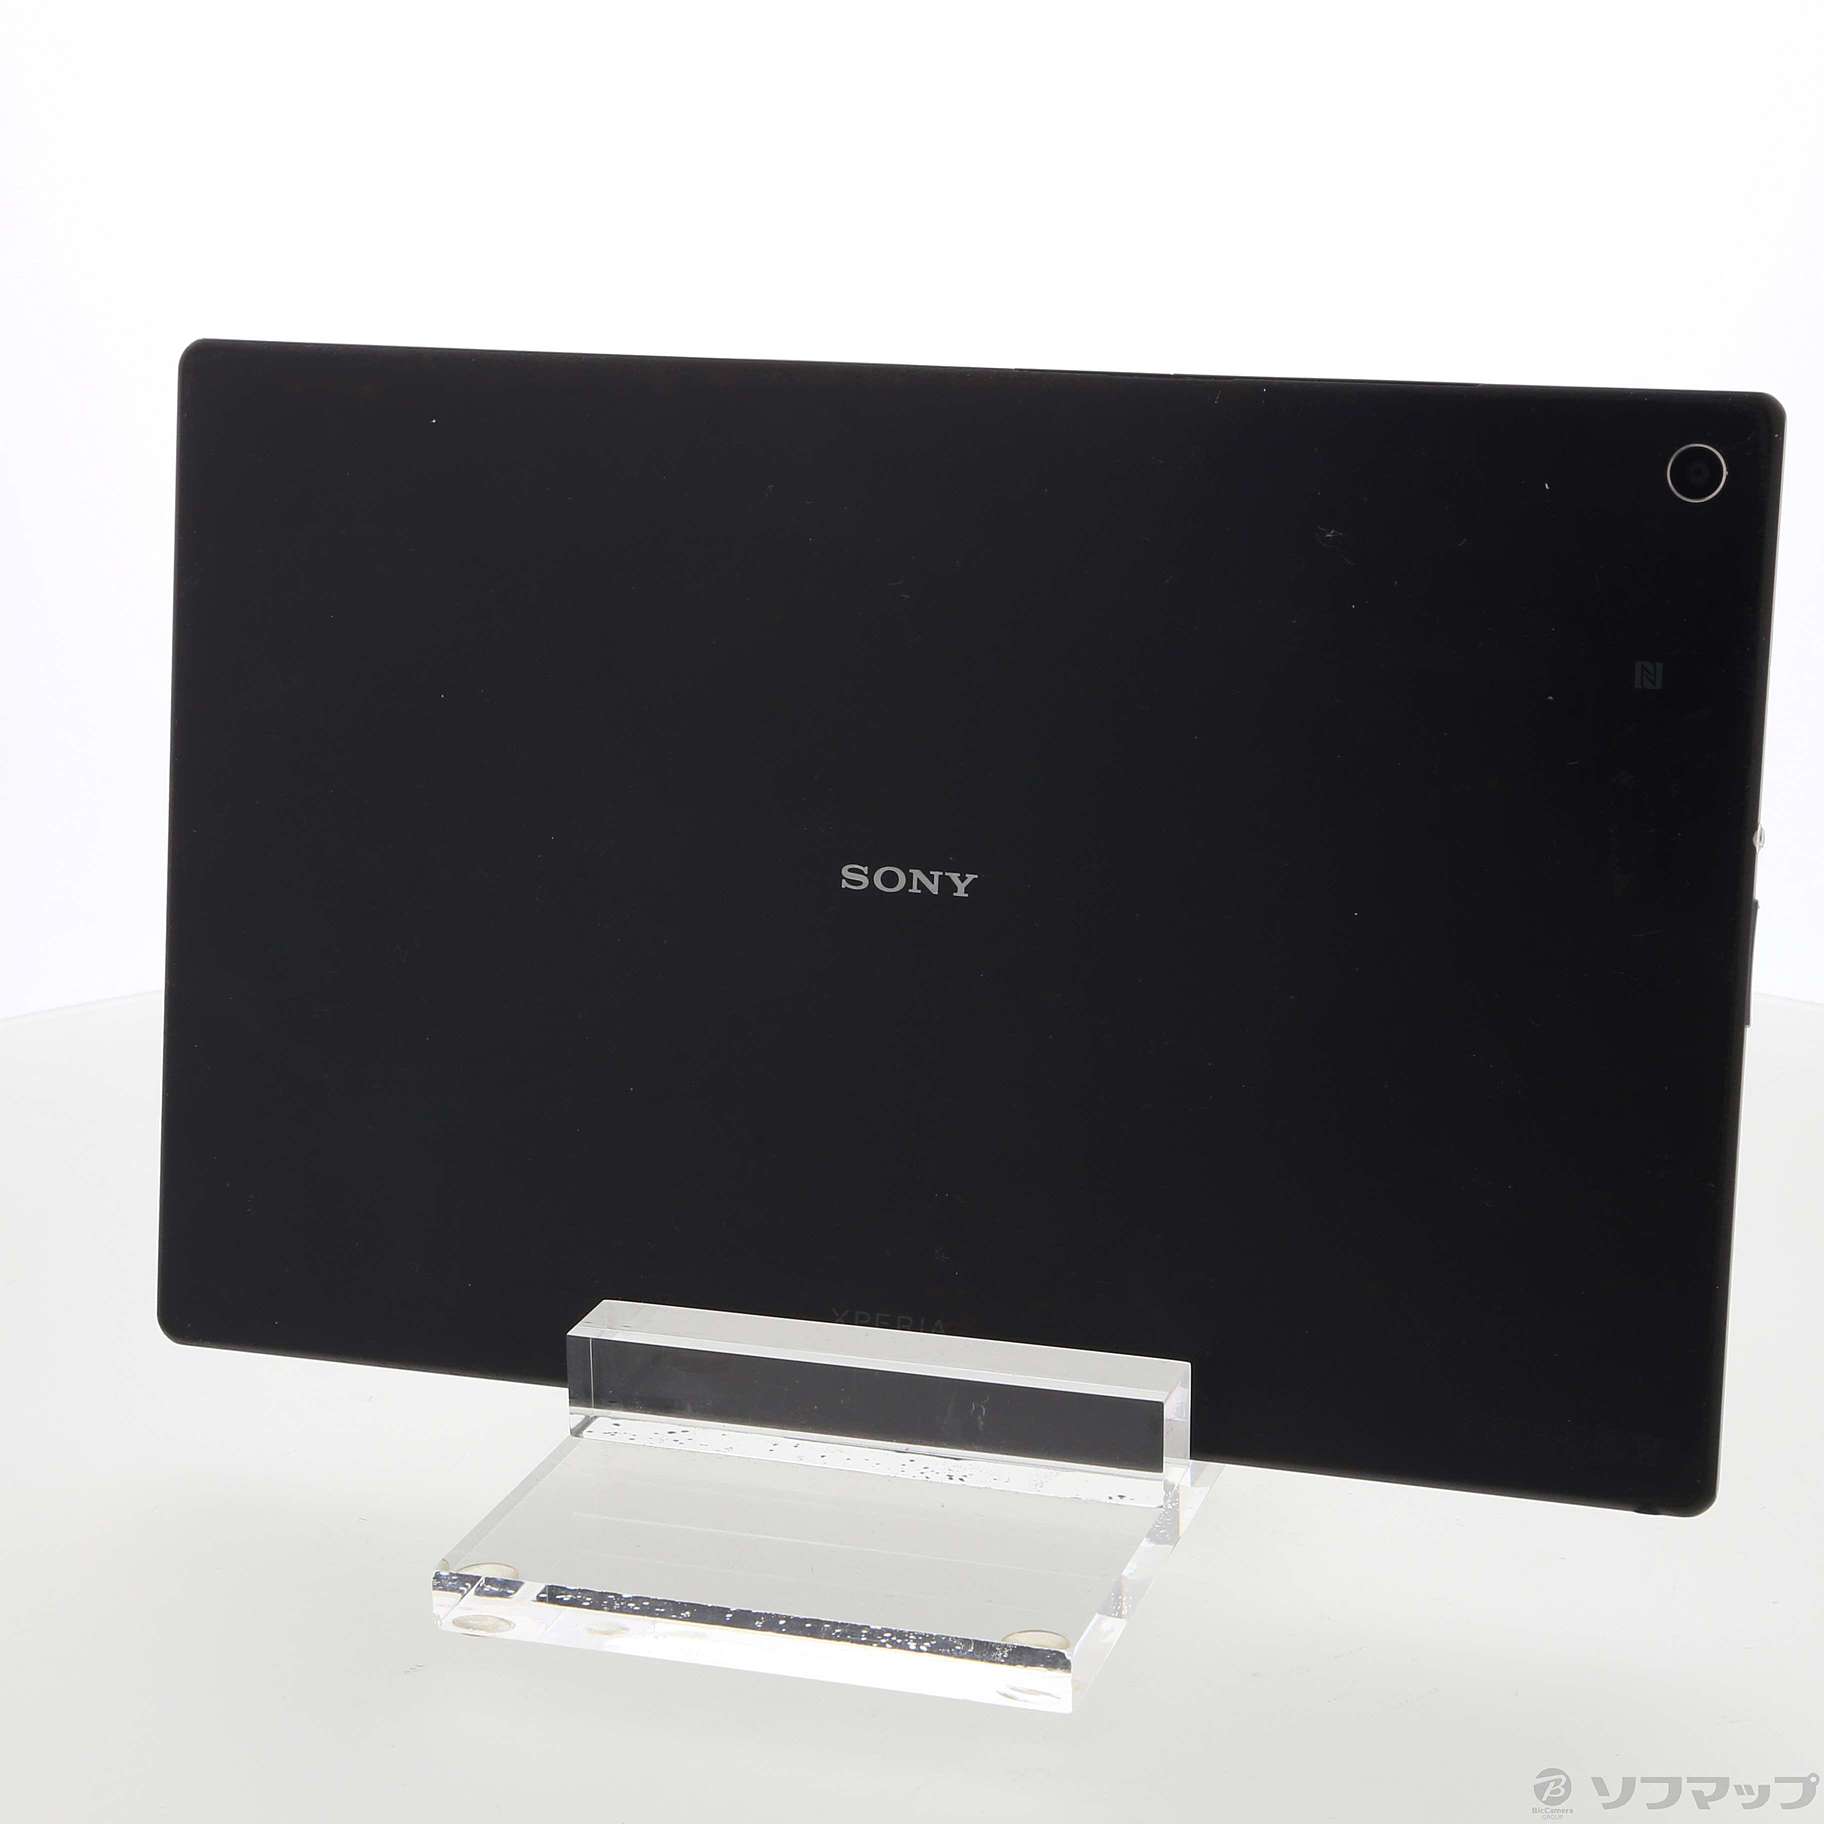 (中古)Xperia Z2 Tablet 16GB SGP511JP/B Wi-Fi(305-ud)